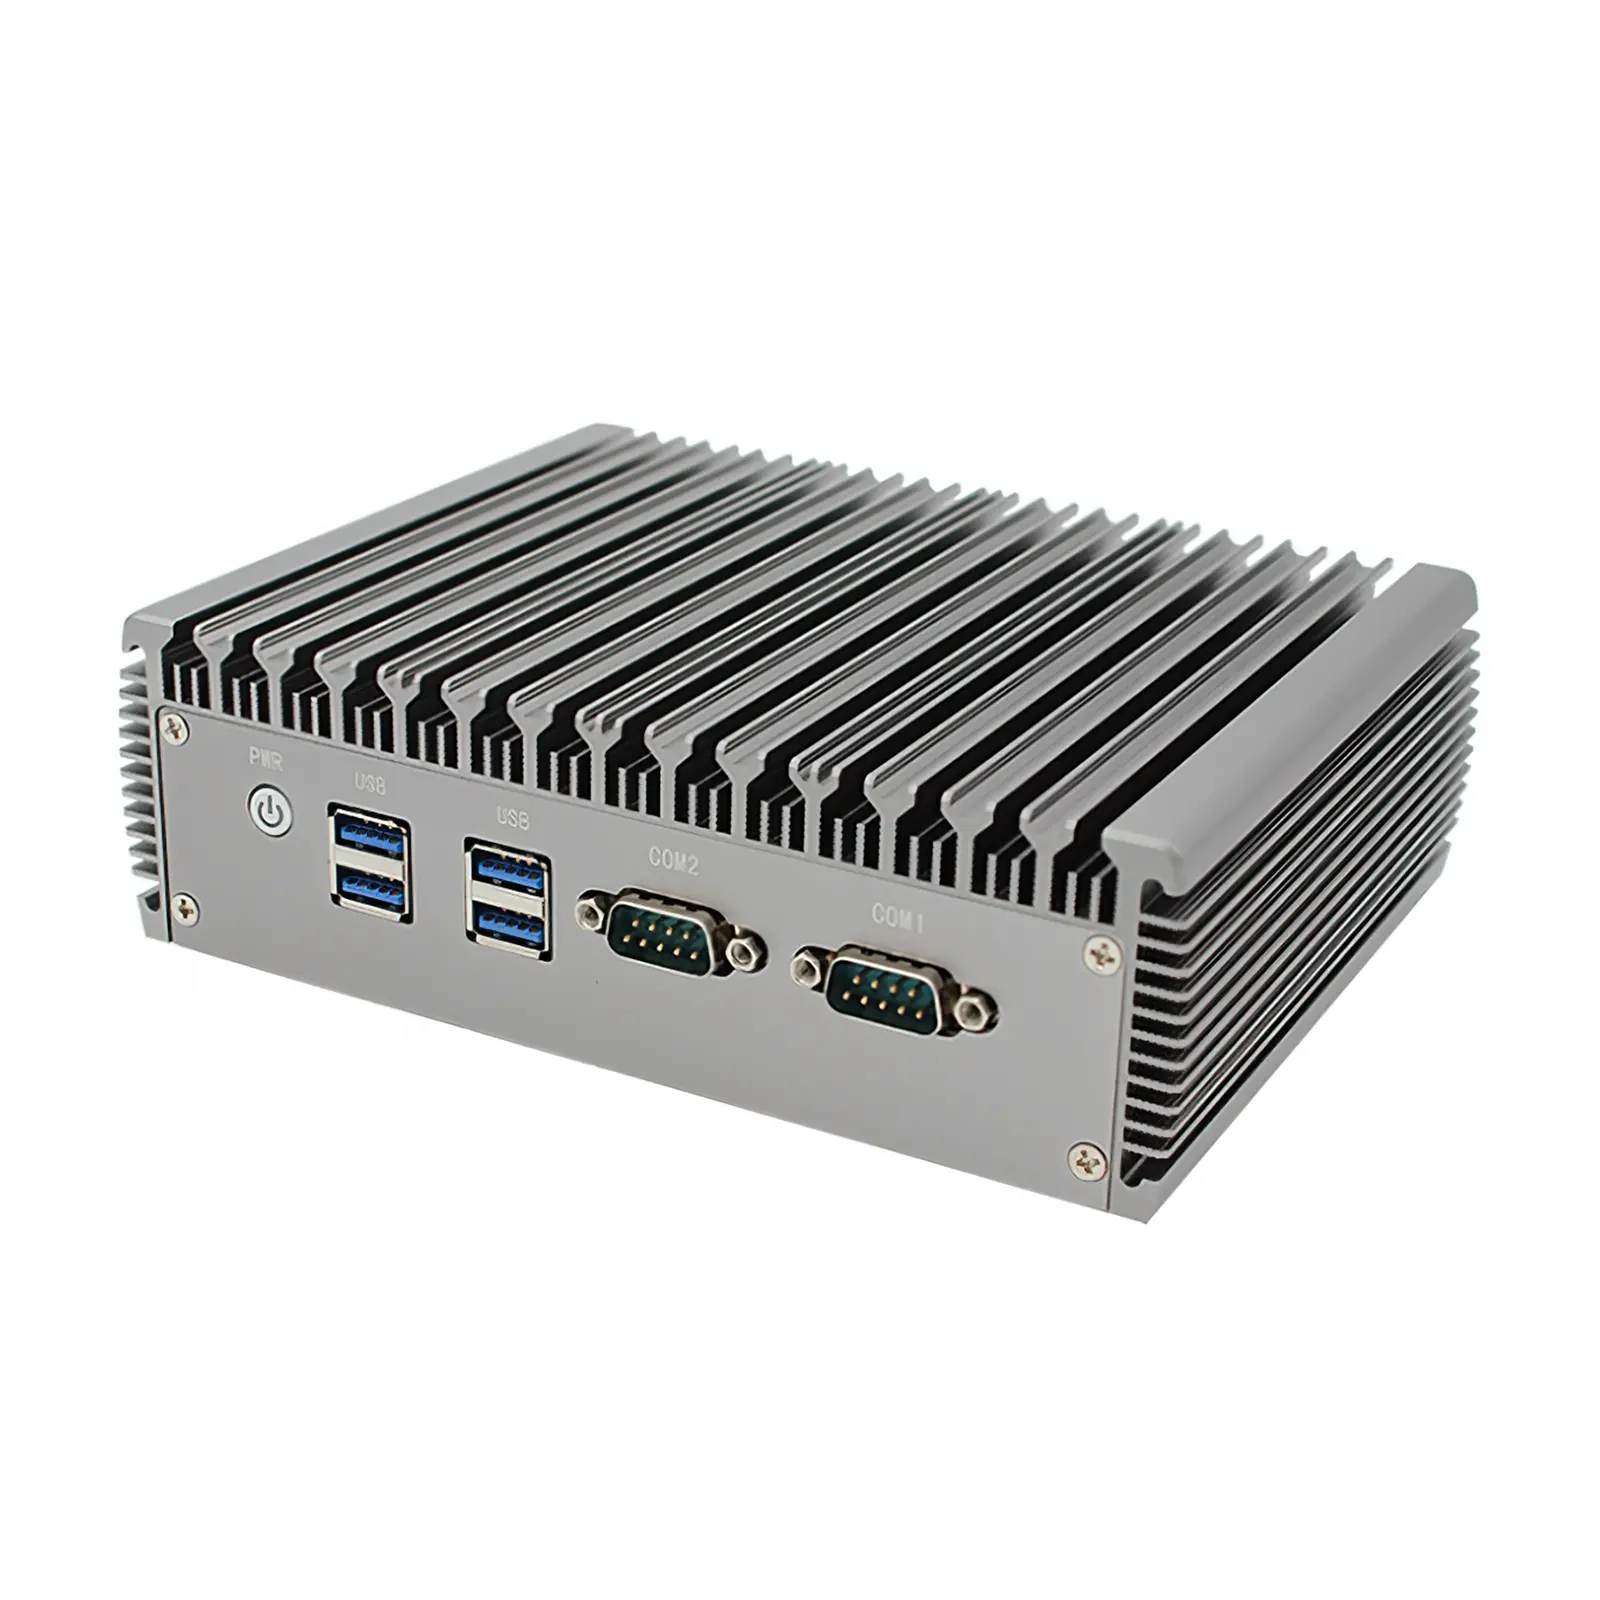 YC D007-N10 미니 산업용 컴퓨터 2xHDMI 및 1xDP 디스플레이 임베디드 미니 IPC J6426/N100 데스크탑 마이크로 산업용 컴퓨터